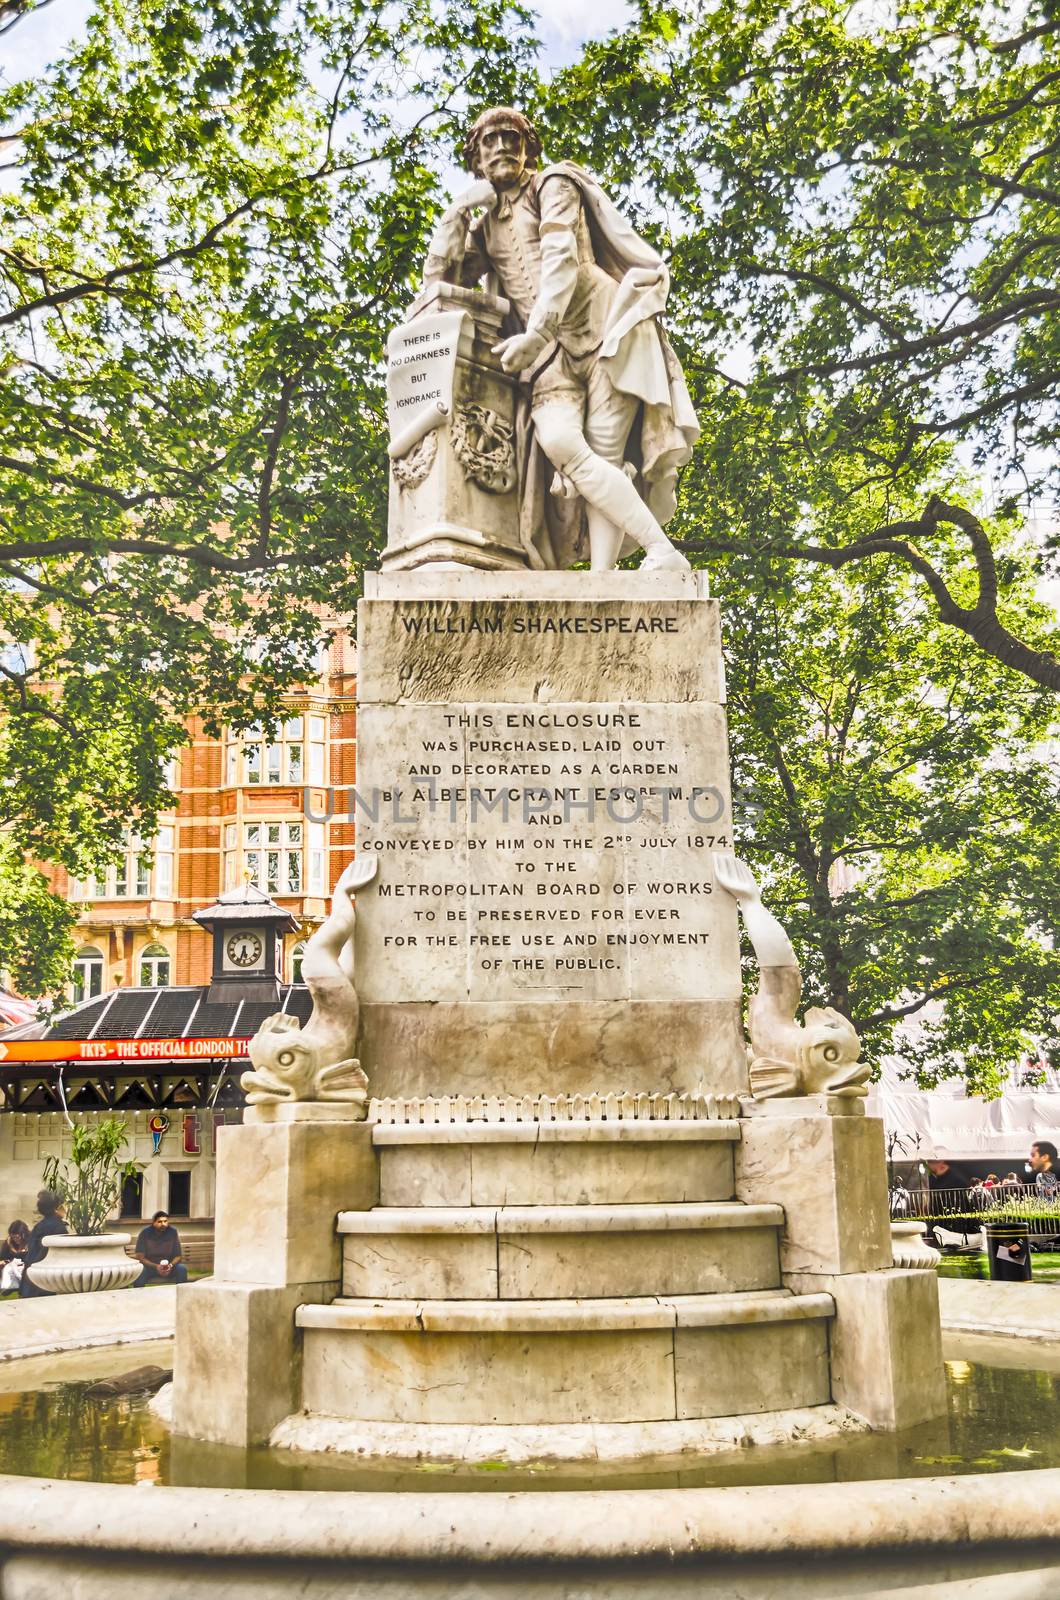 Statue of William Shakespeare in Leicester Square, London by marcorubino